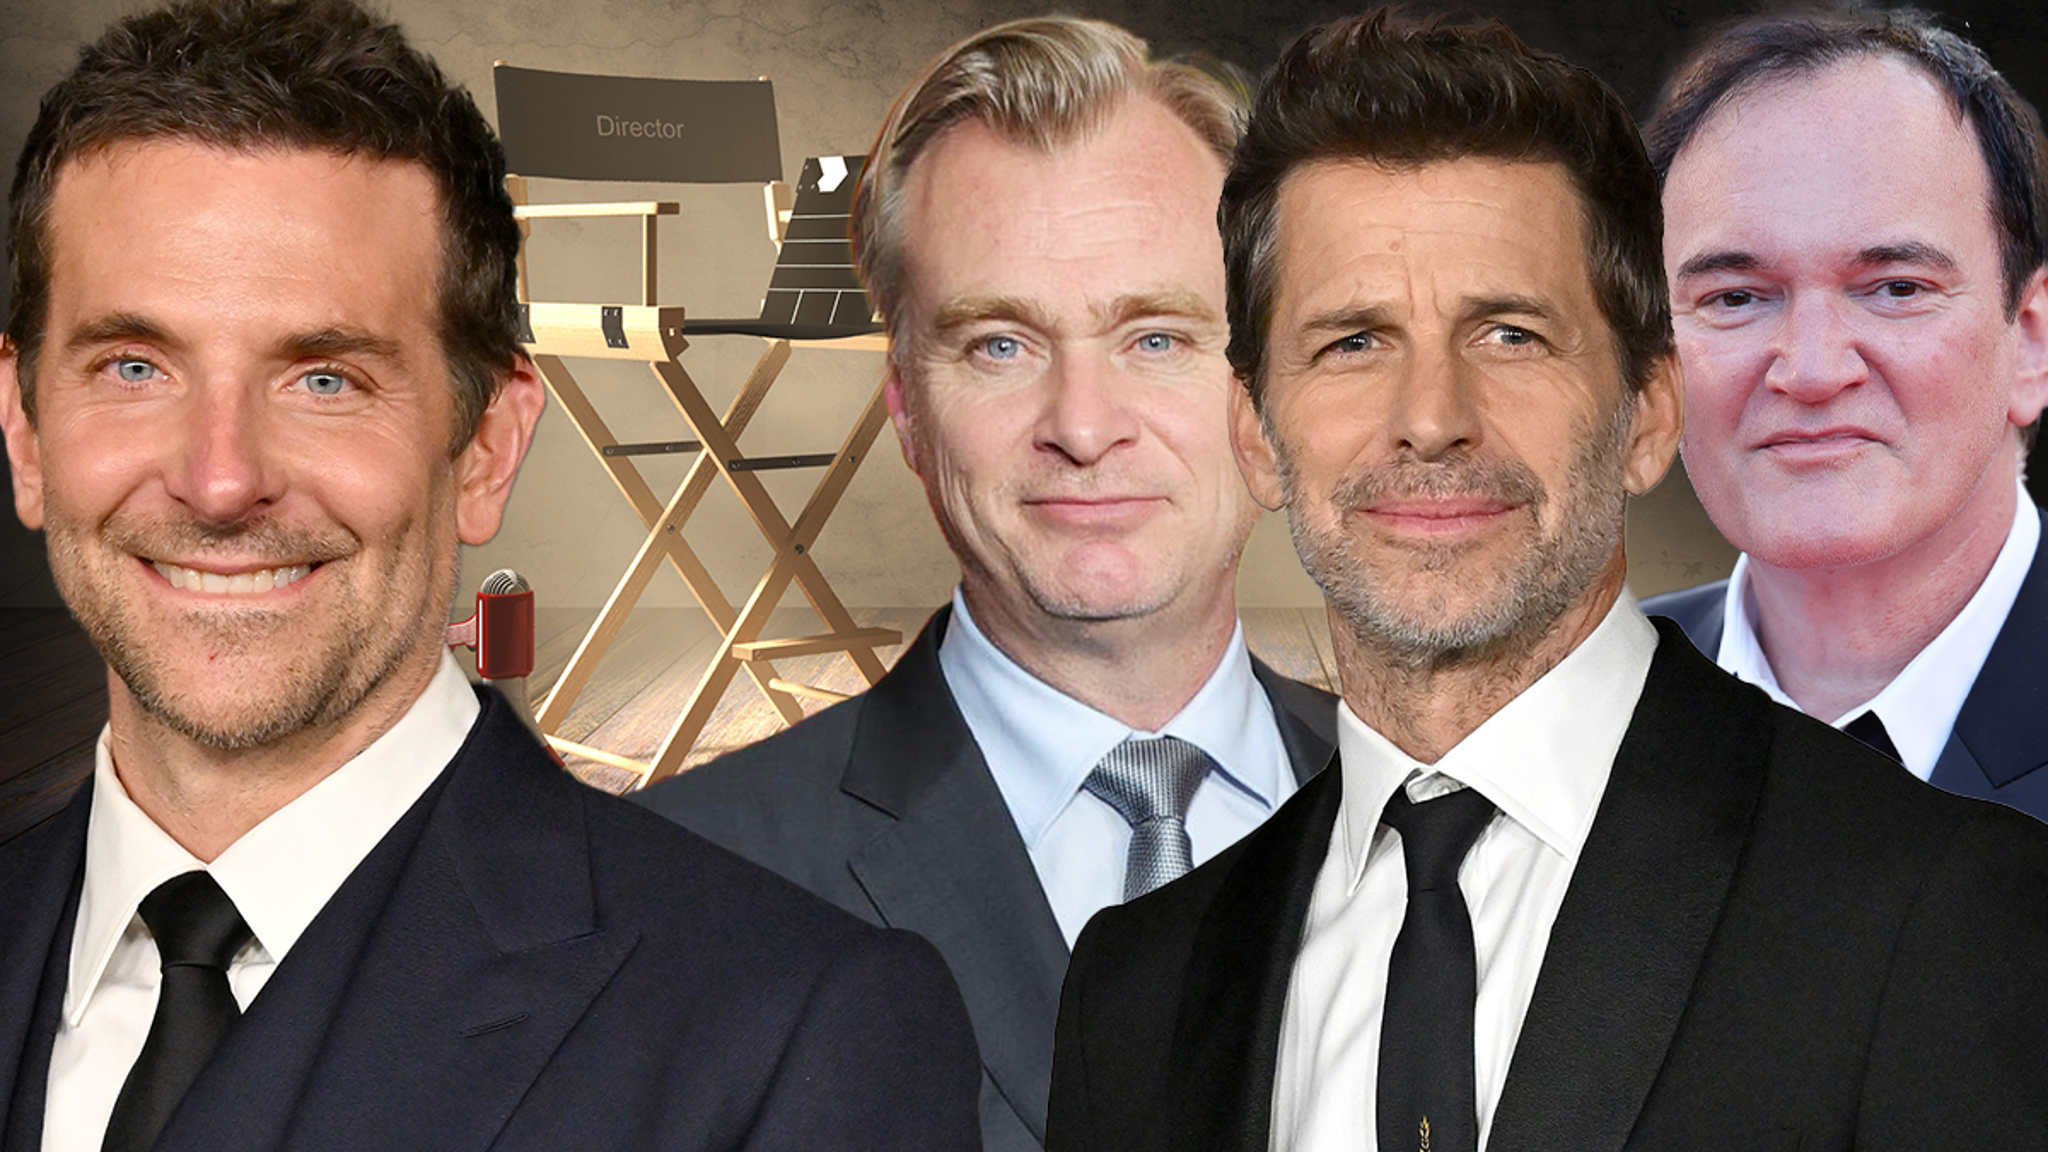 Bradley Cooper’s “Chair Ban” on set is not unusual among directors